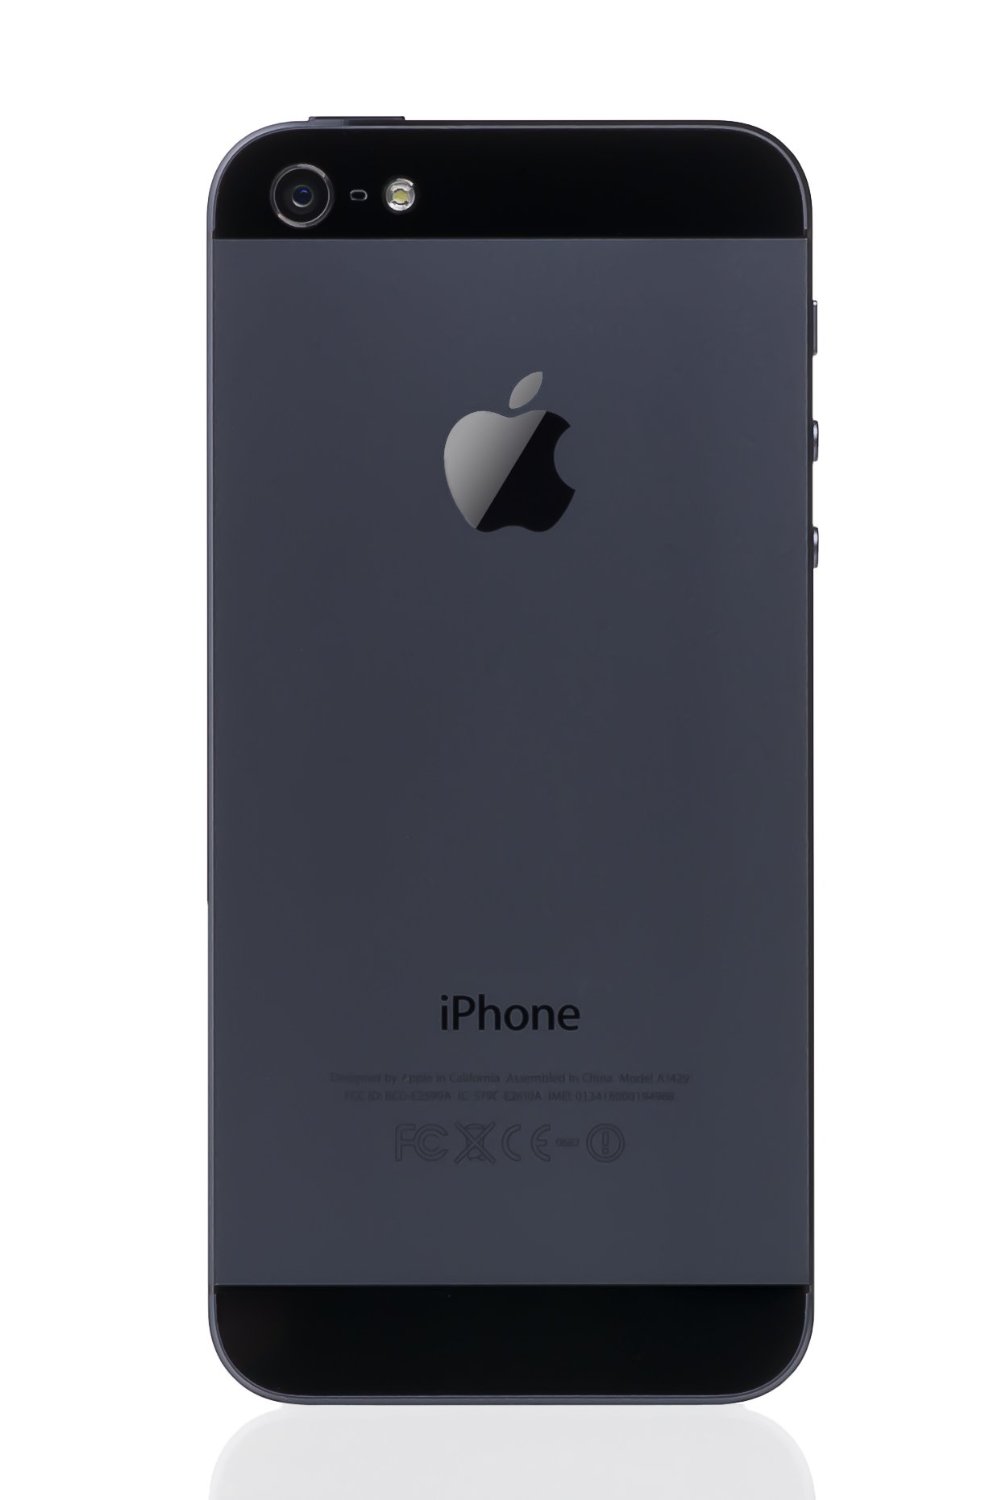 Айфон 5 оригинал. Iphone 5 16gb. Apple iphone 5. Айфон 5 черный. Айфон 5 айфон 5.